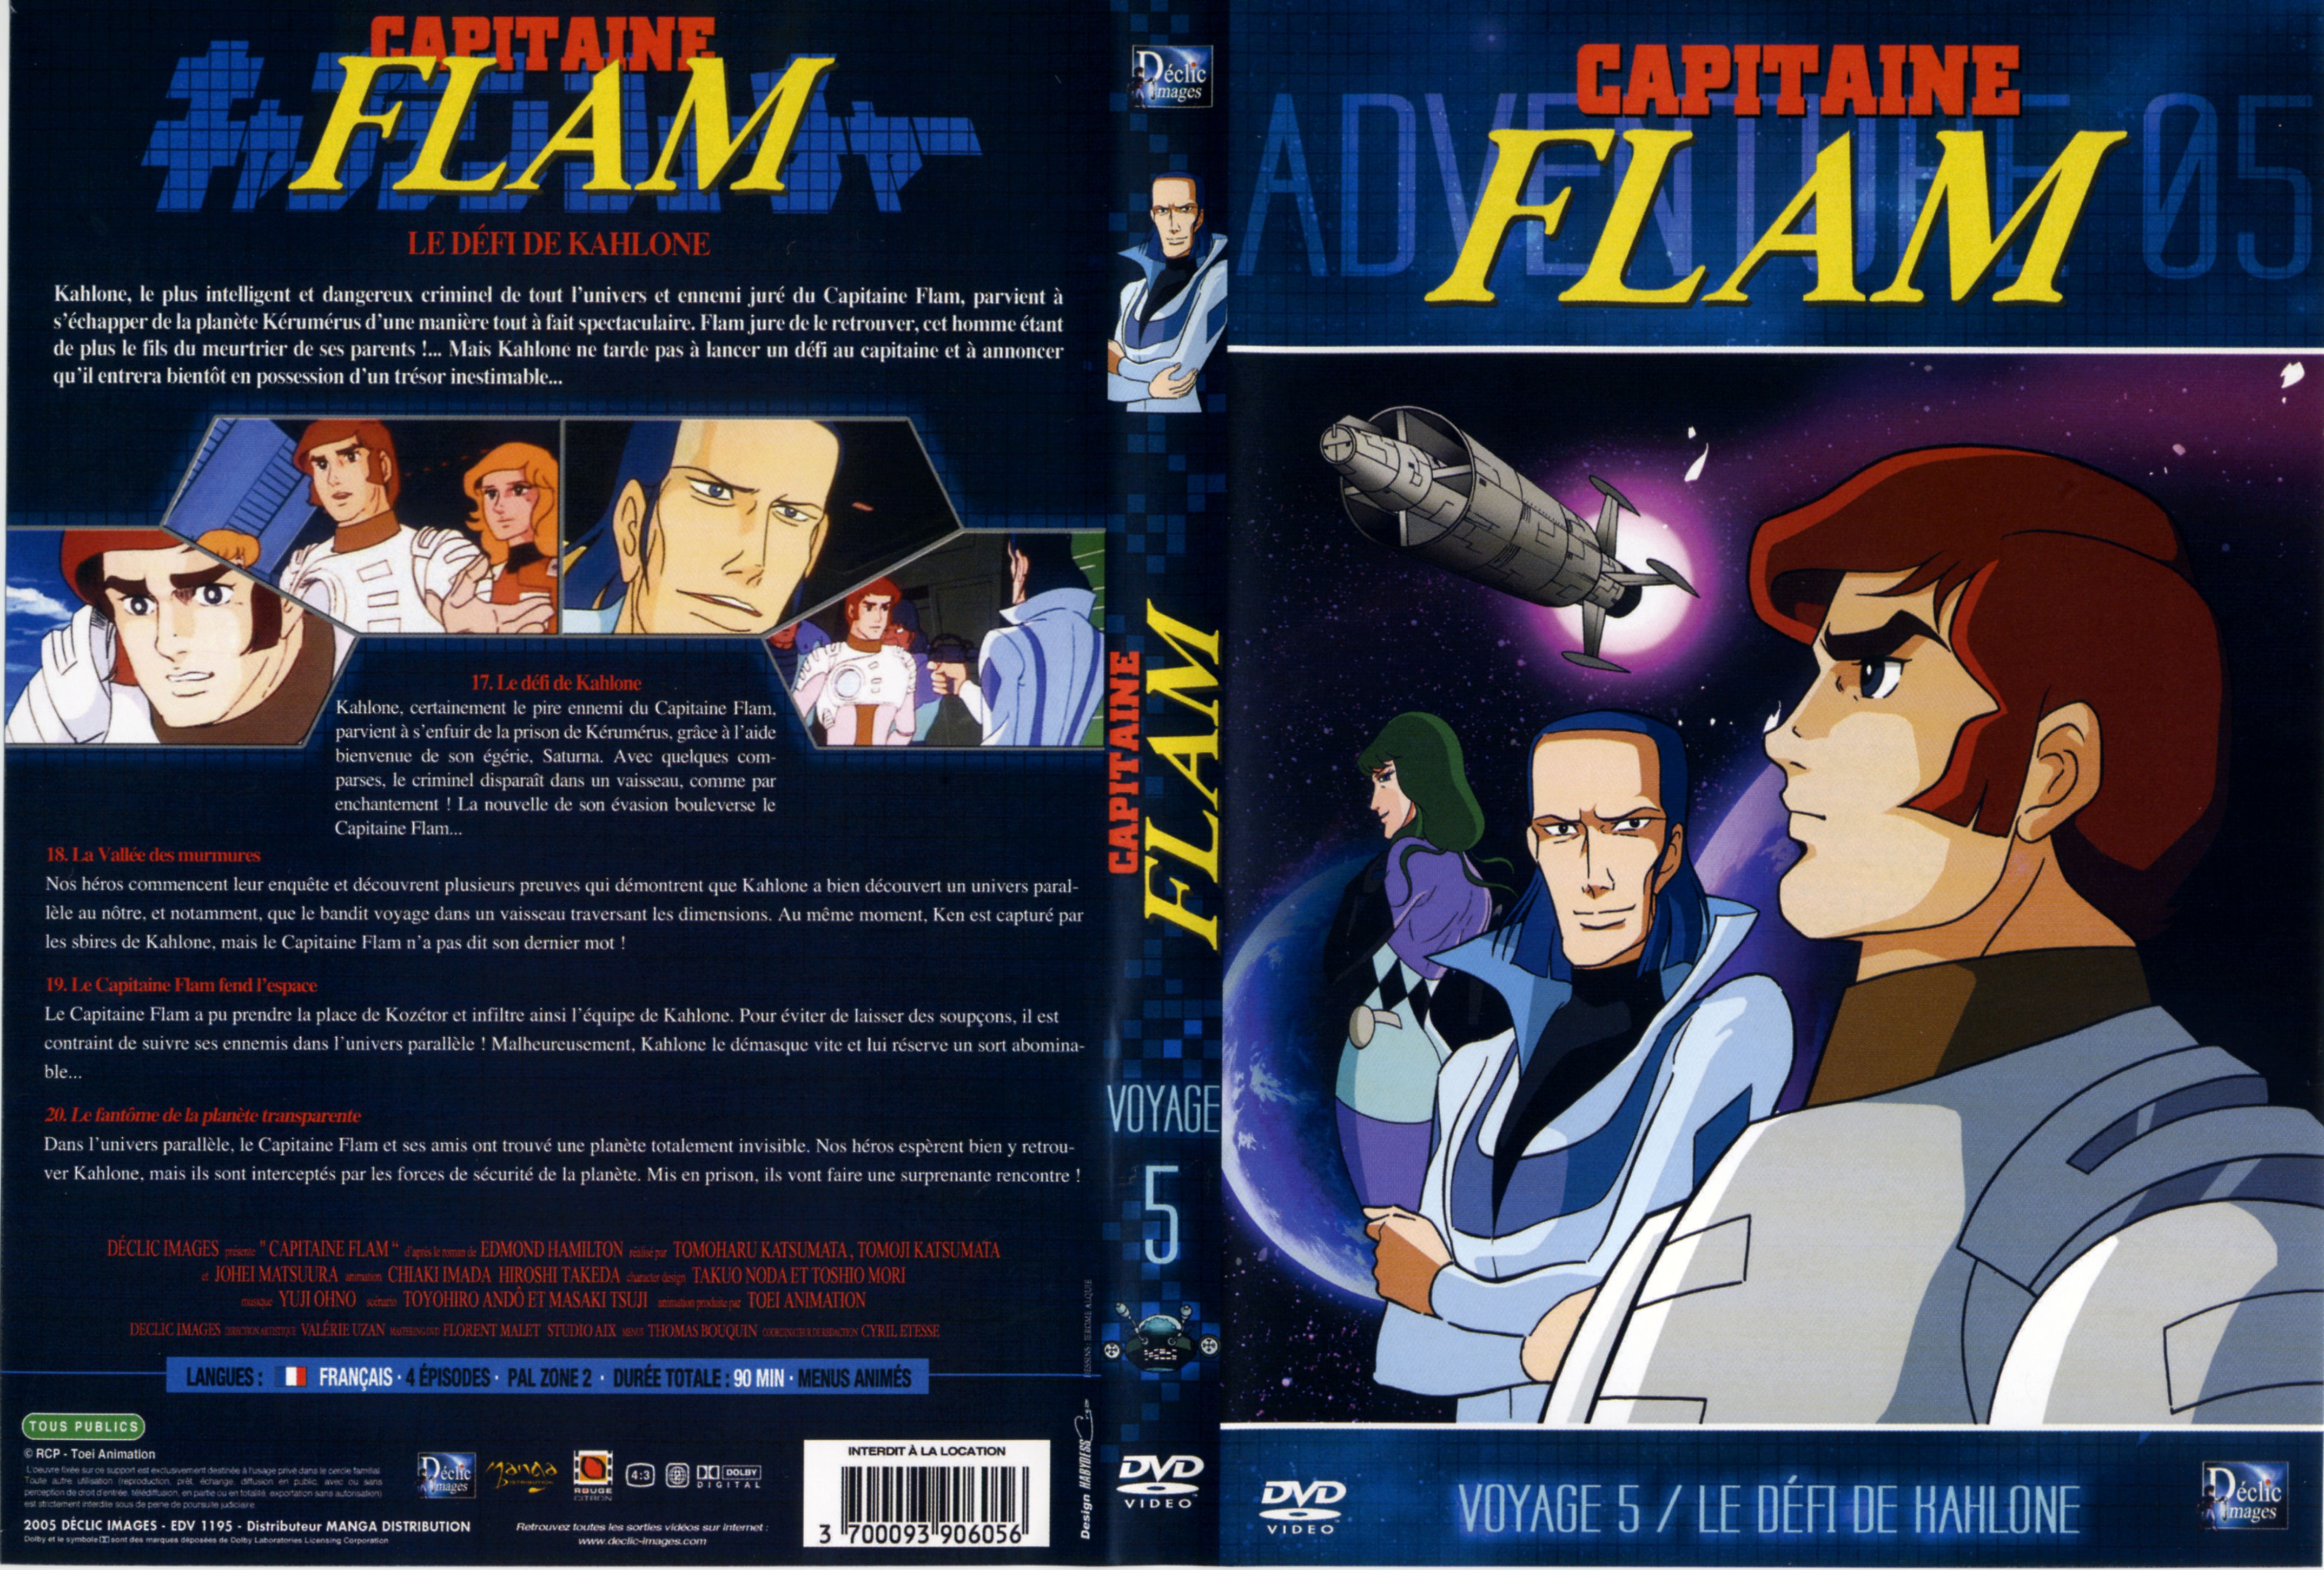 Jaquette DVD Capitaine Flam vol 5 (DECLIC IMAGES)